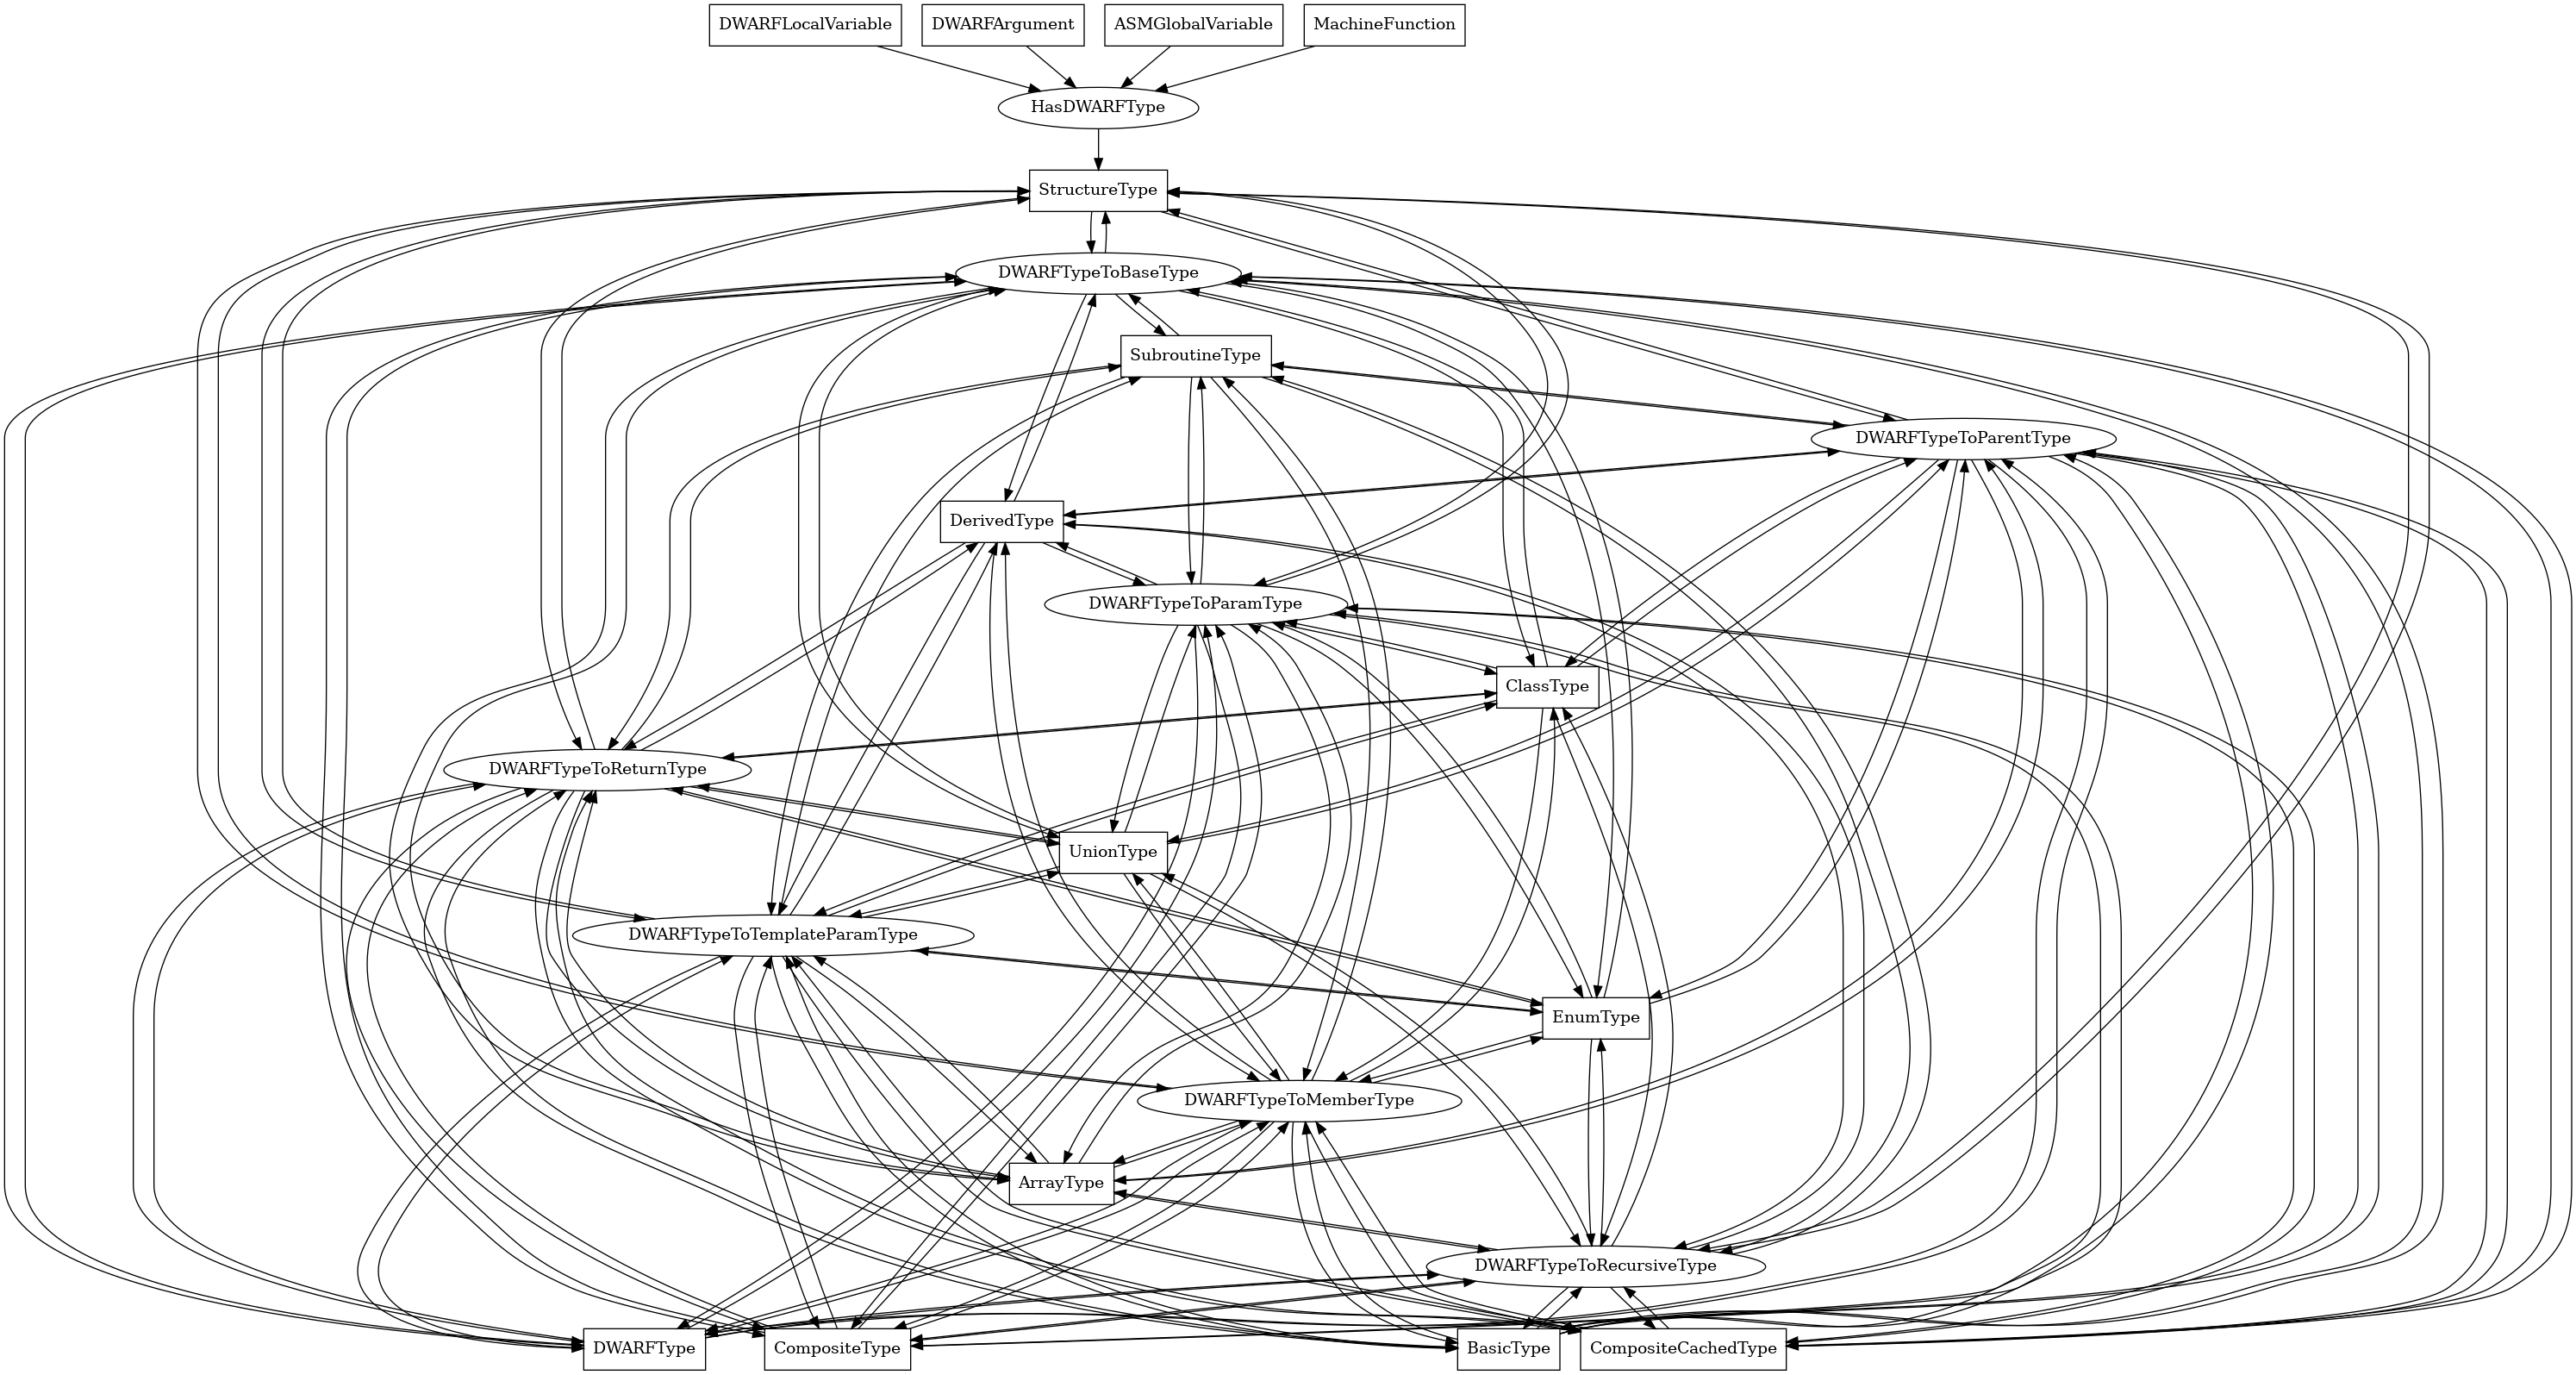 Entity-relationship diagram for StructureType nodes